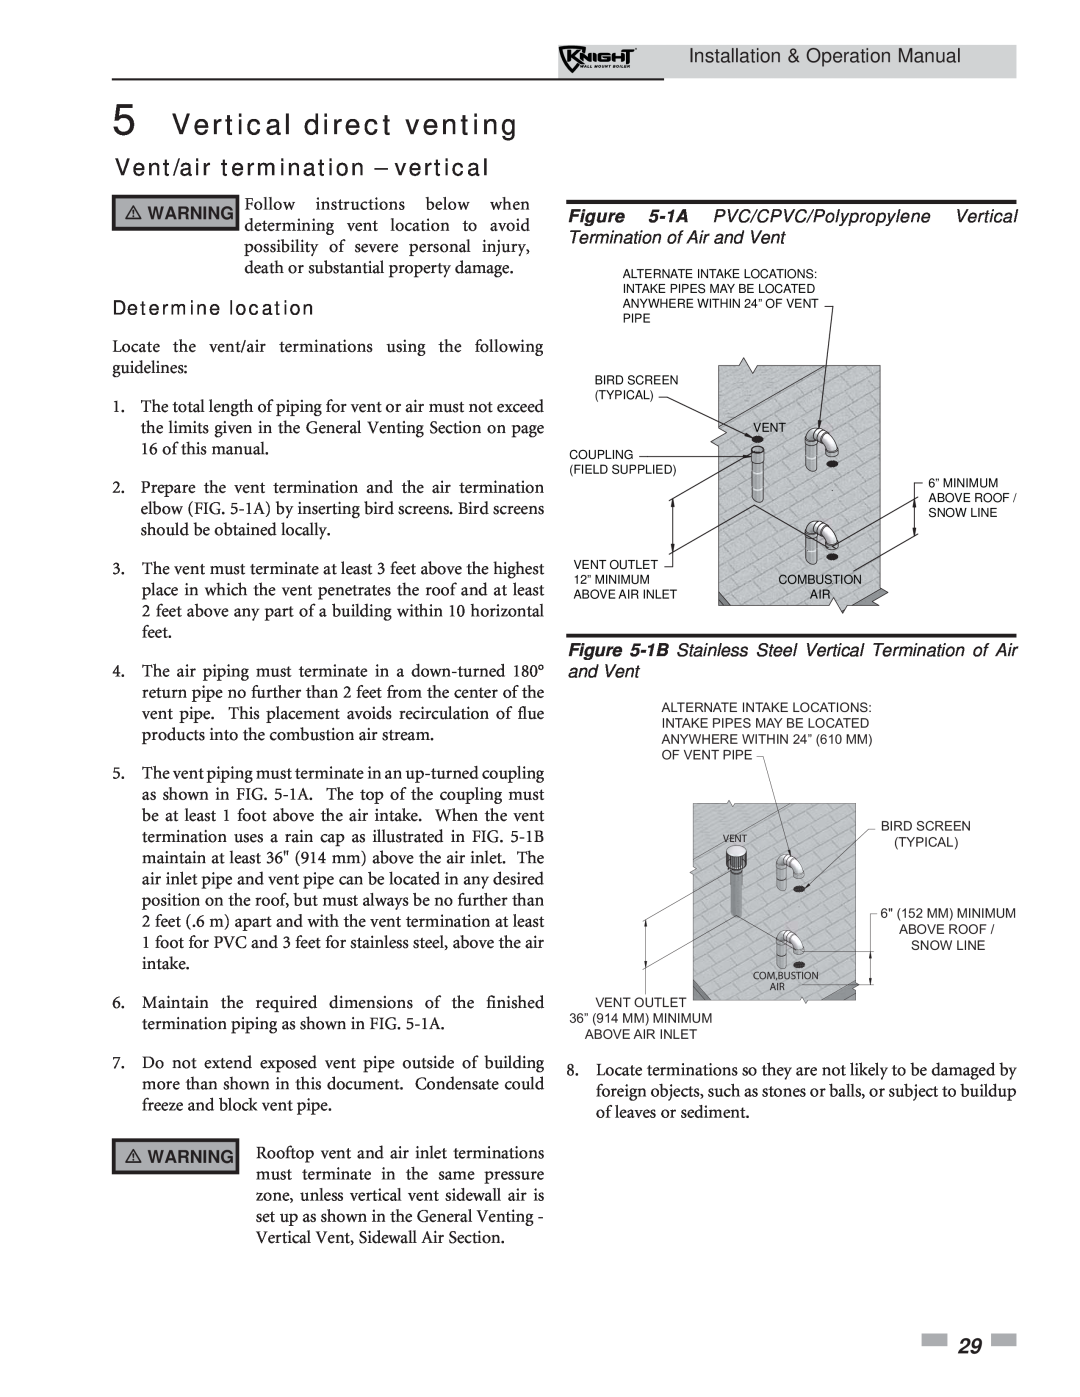 Lochinvar 51-211 operation manual Vertical direct venting, Vent/air termination - vertical, Determine location 